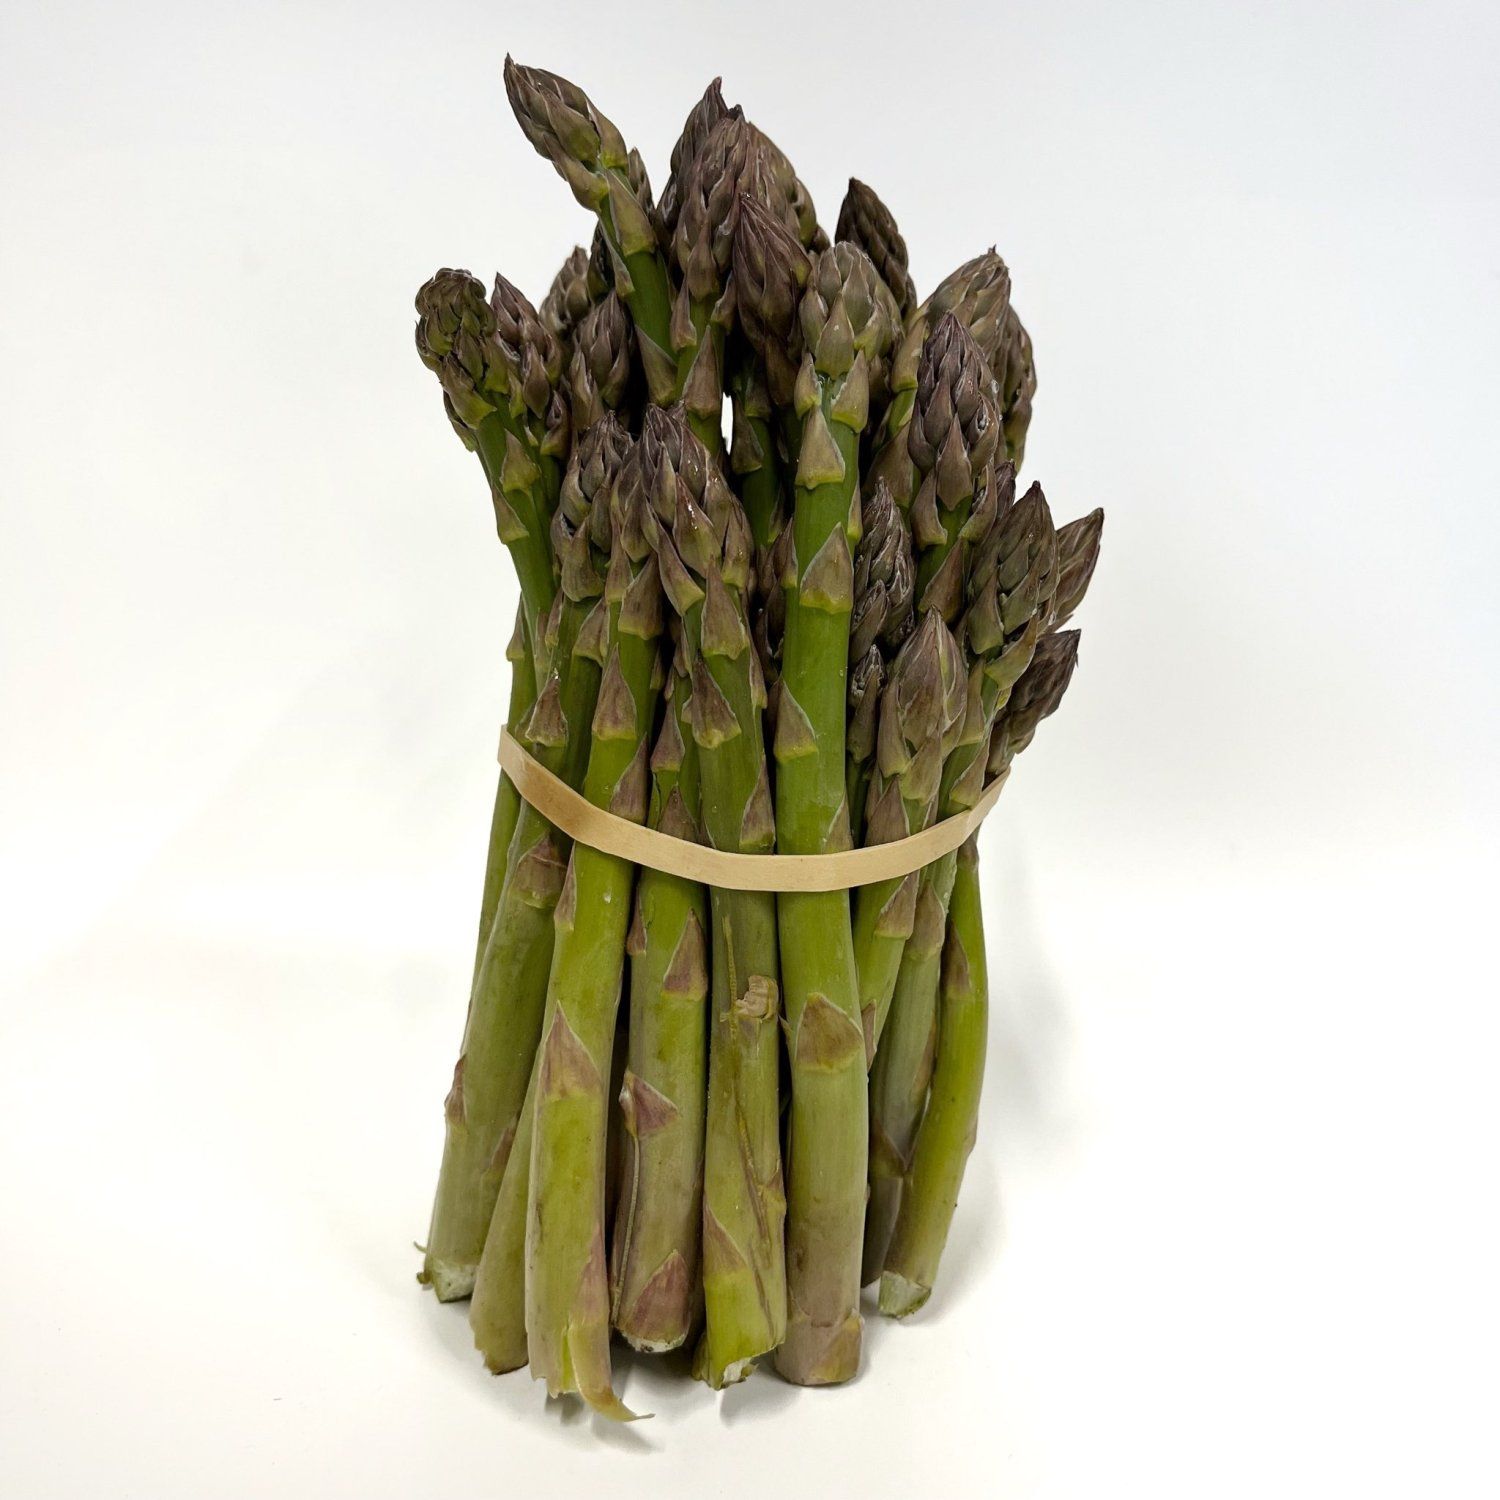 Next Happening: We have asparagus!